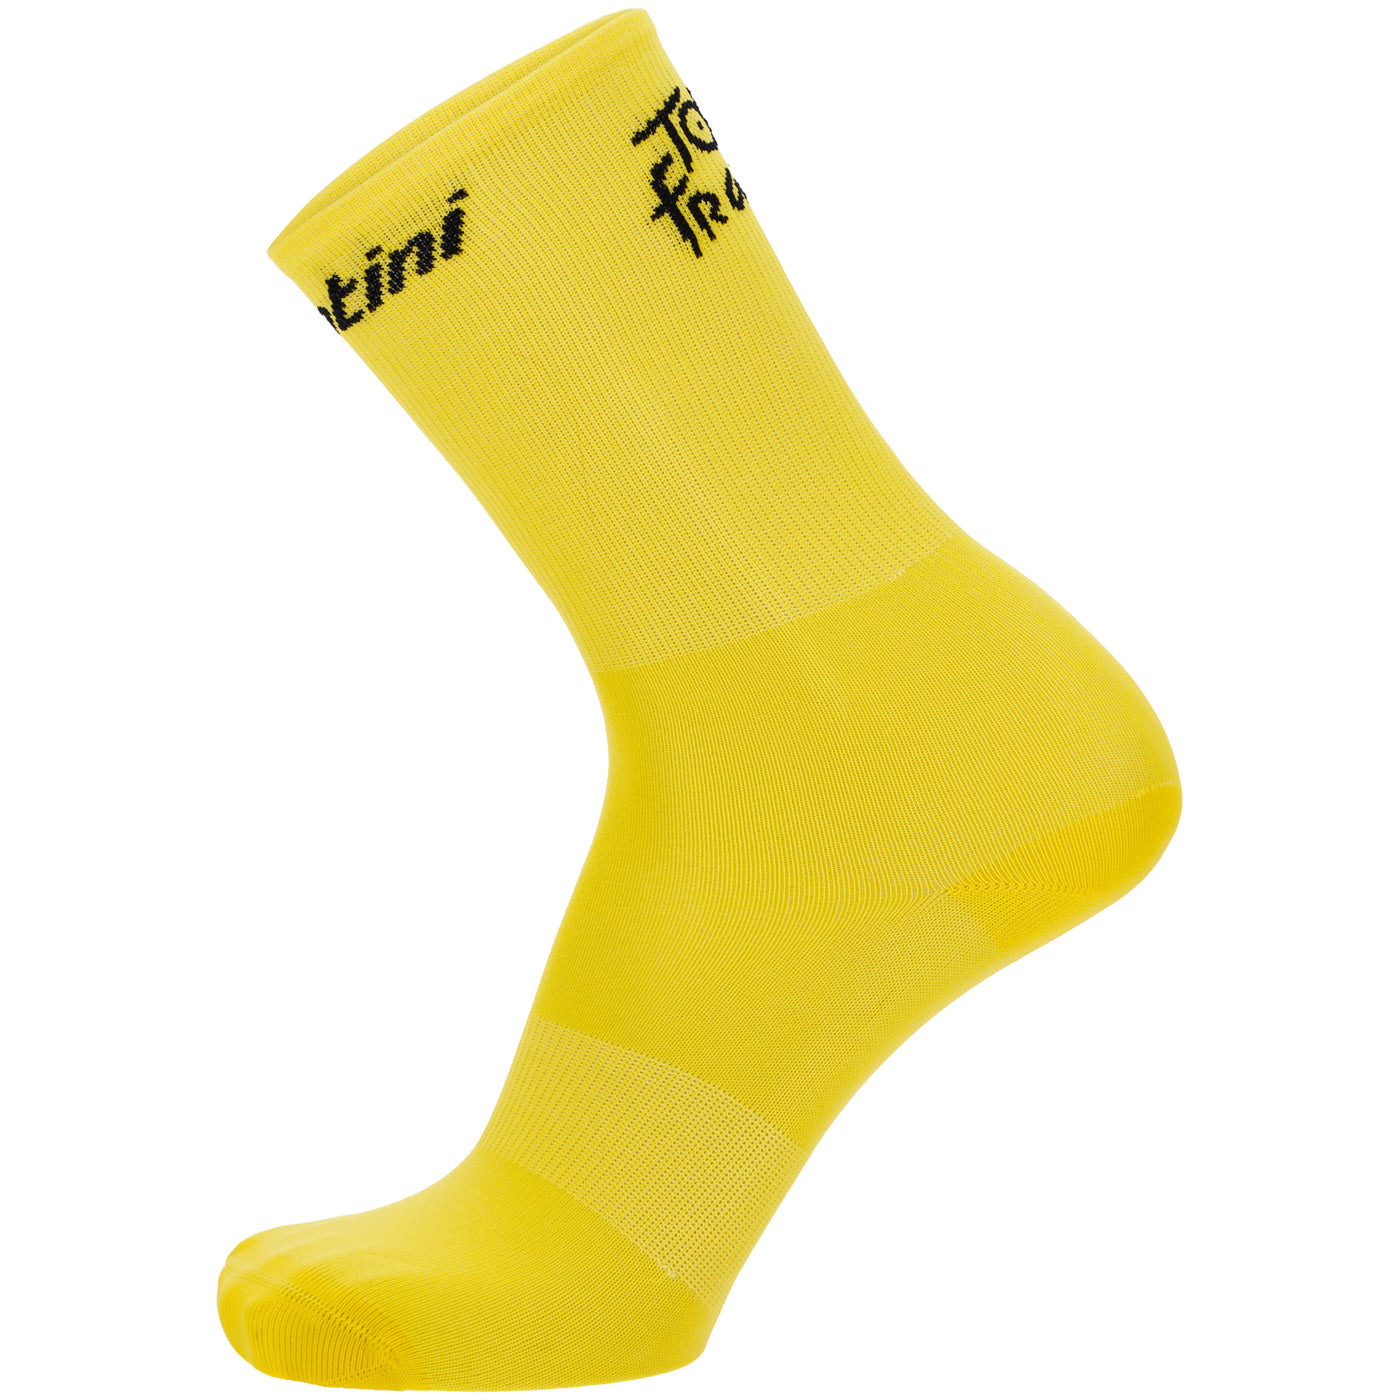 Tour de France socks - Leader 